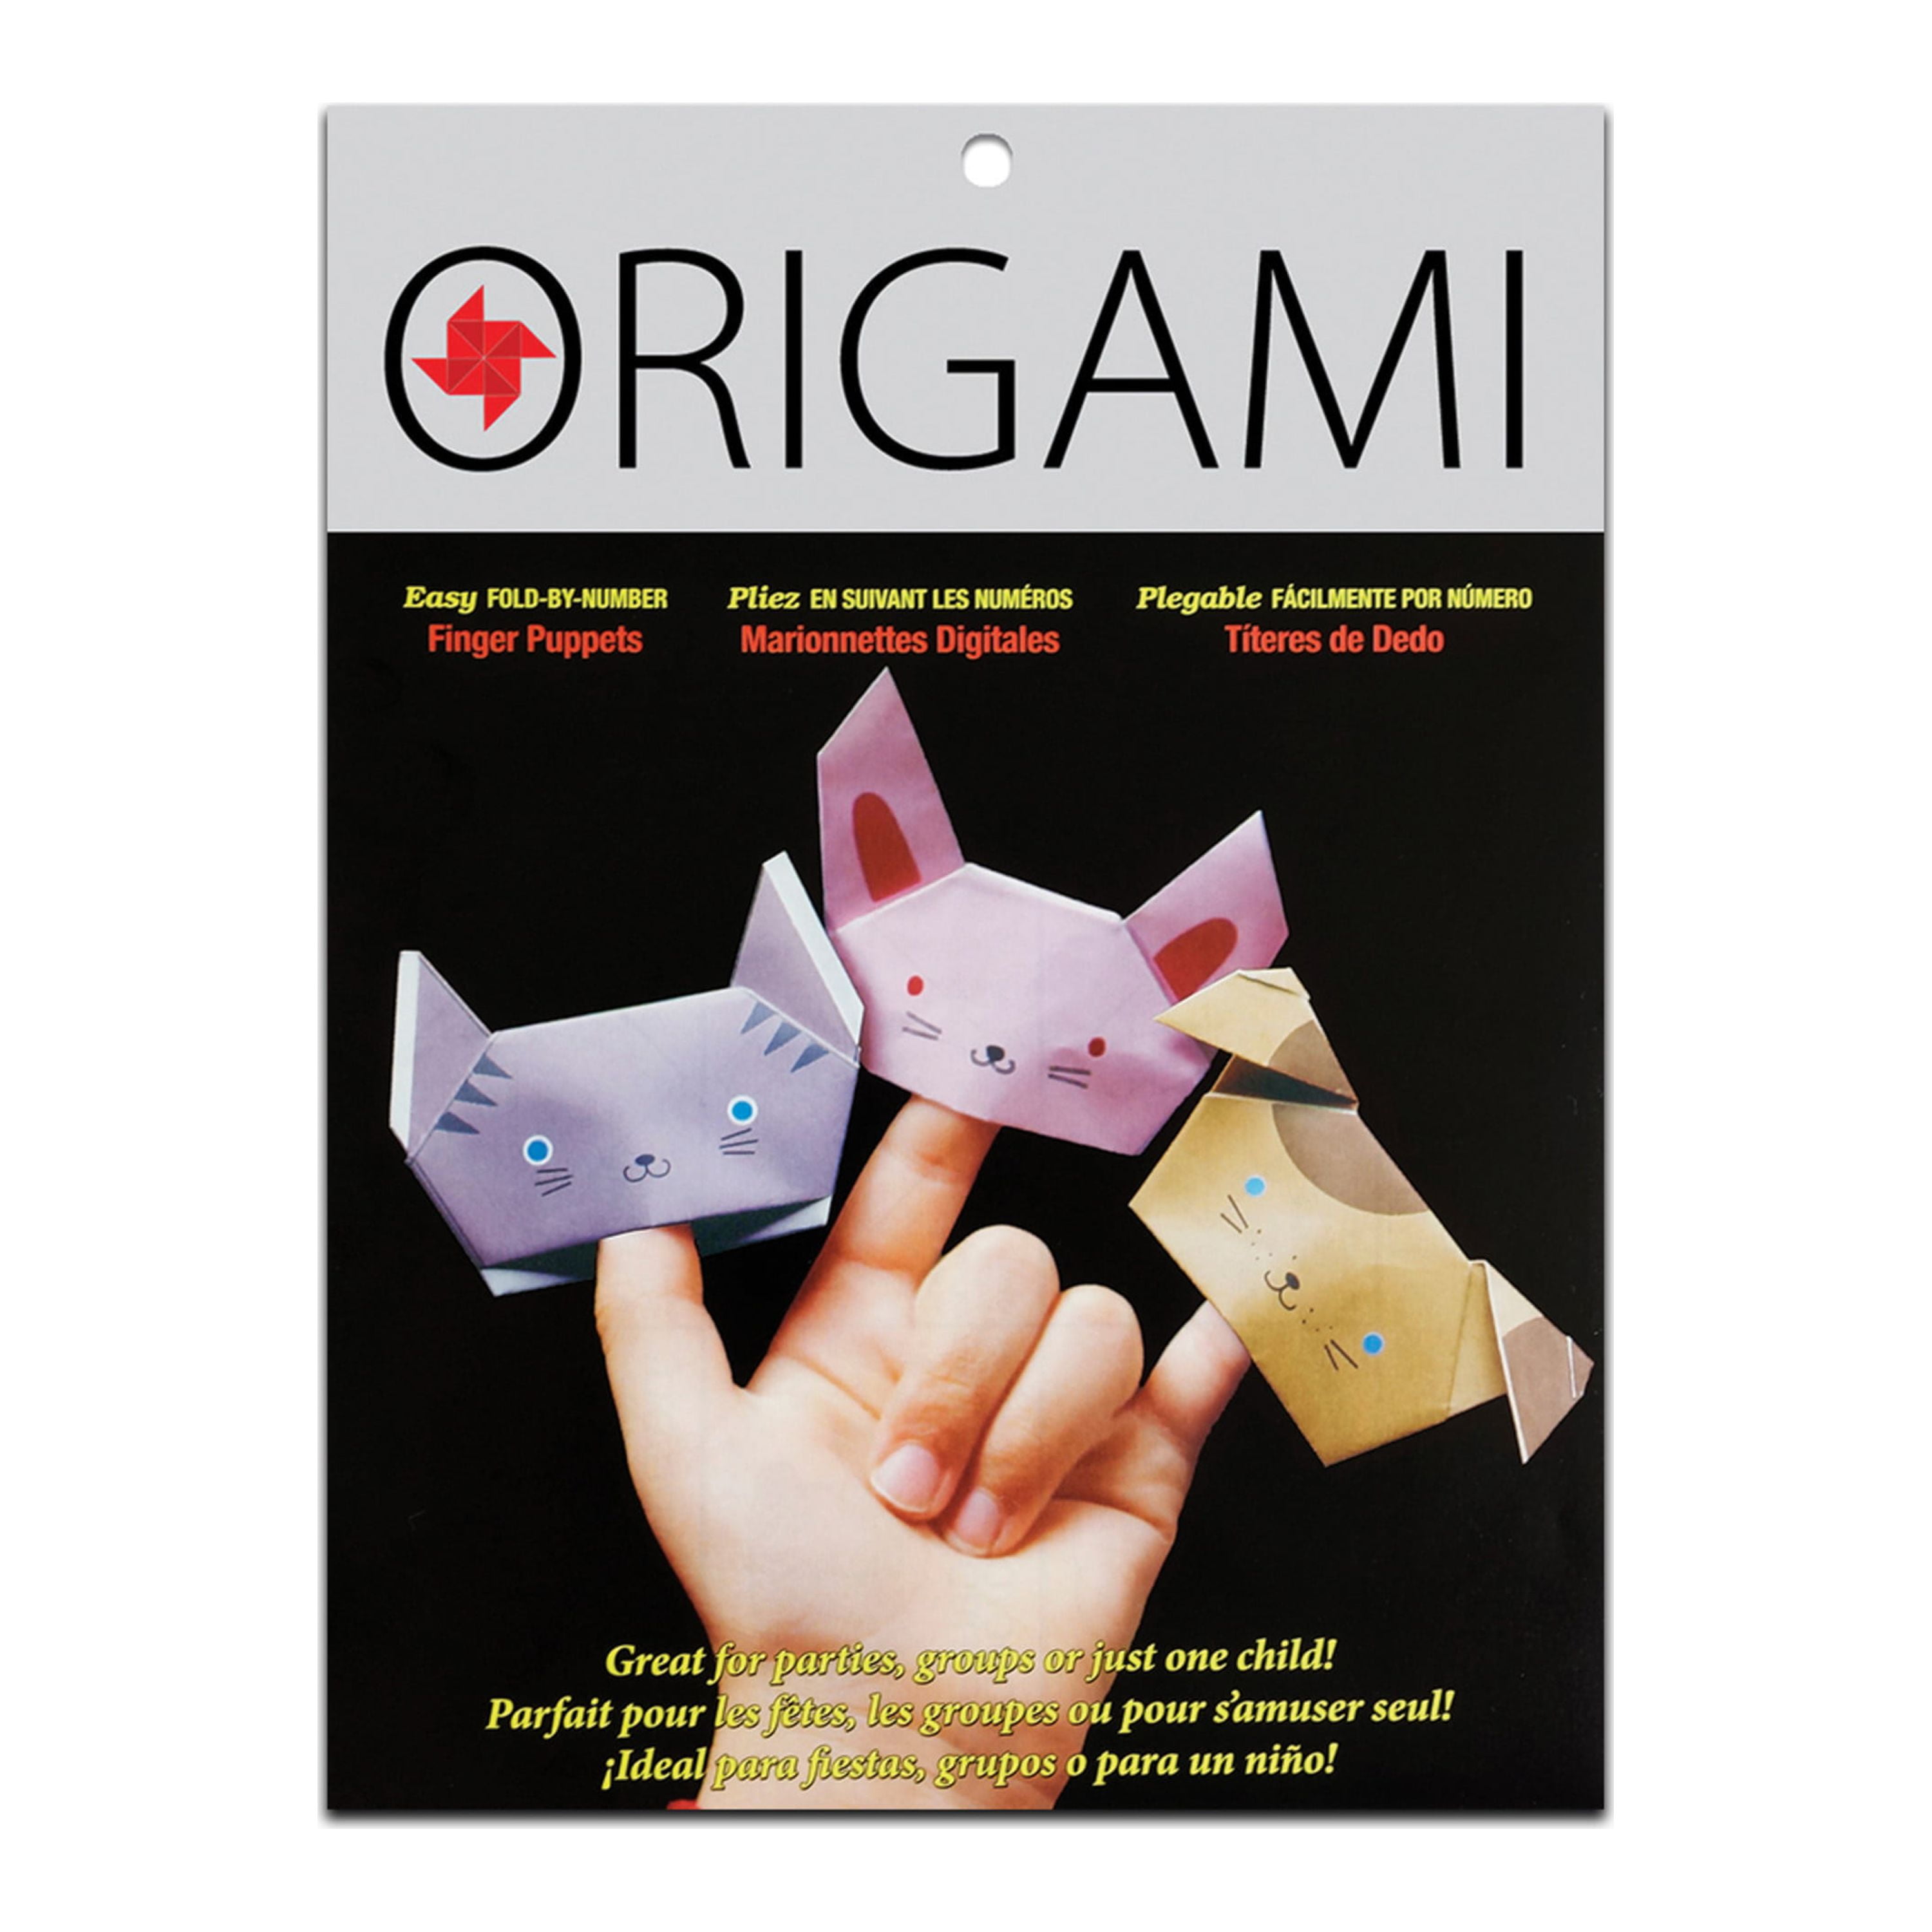 Yasutomo® Large Origami Paper Set